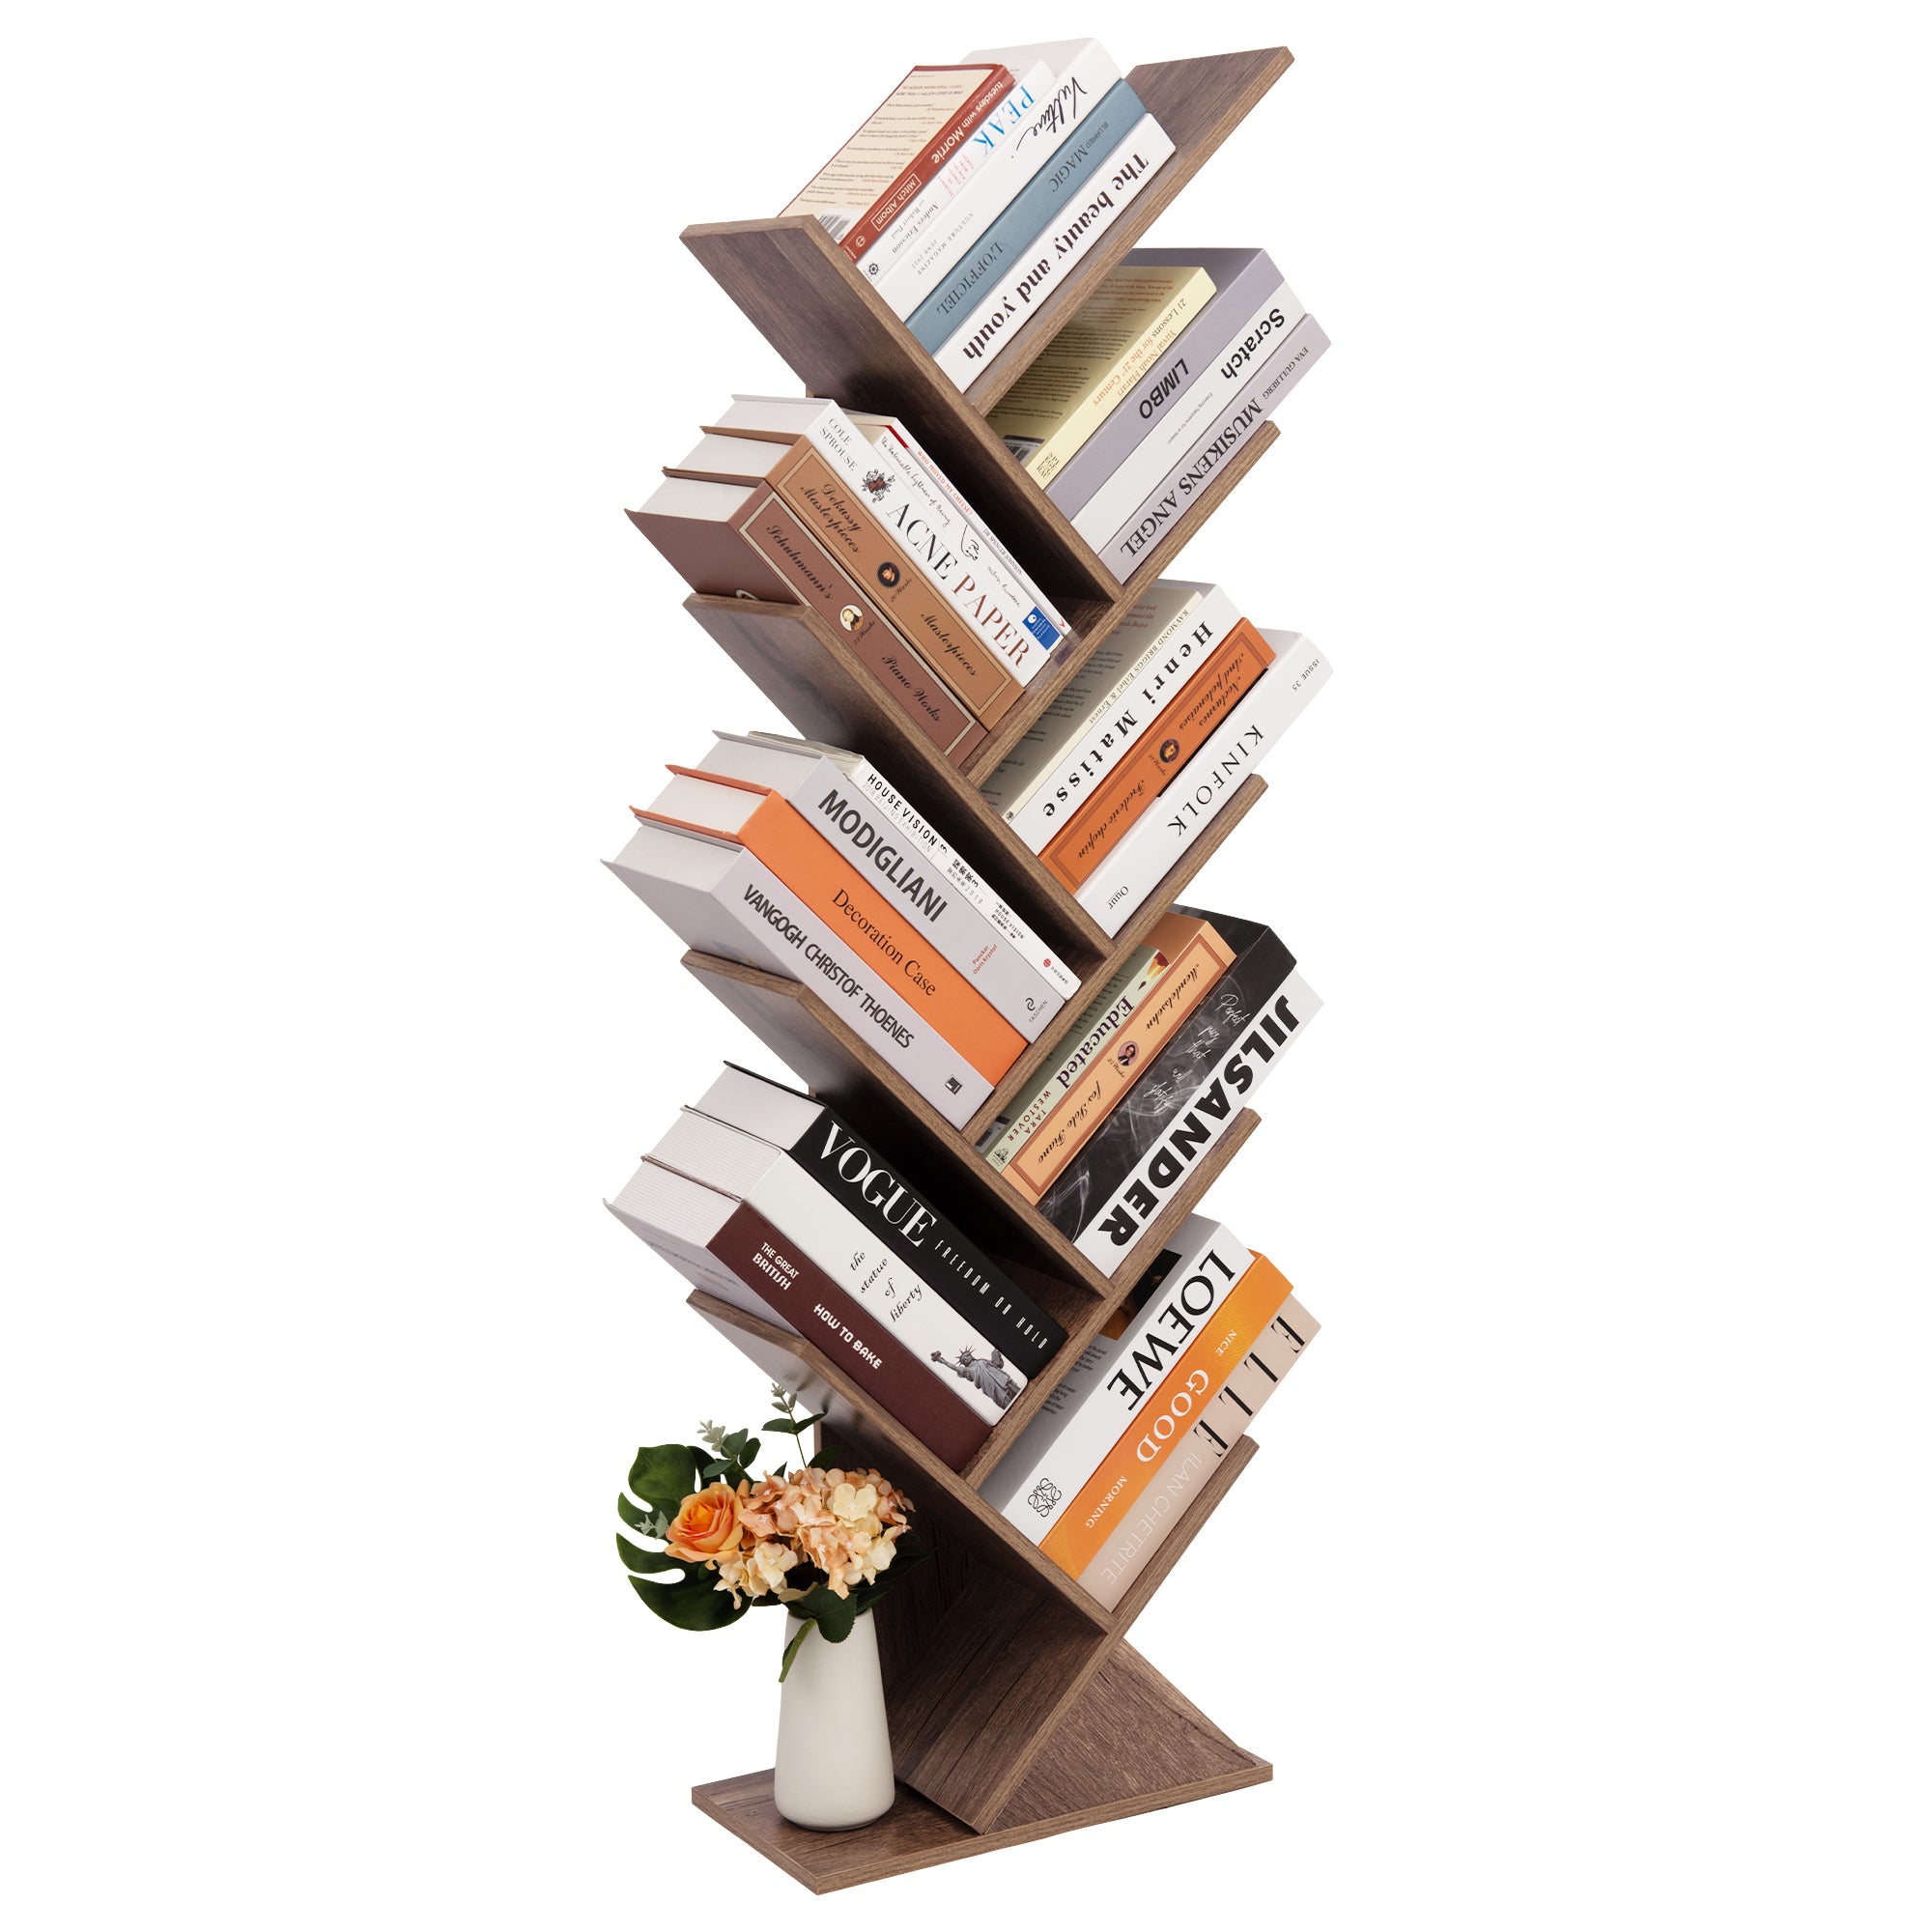 Tiered Tree Bookcase Shelf